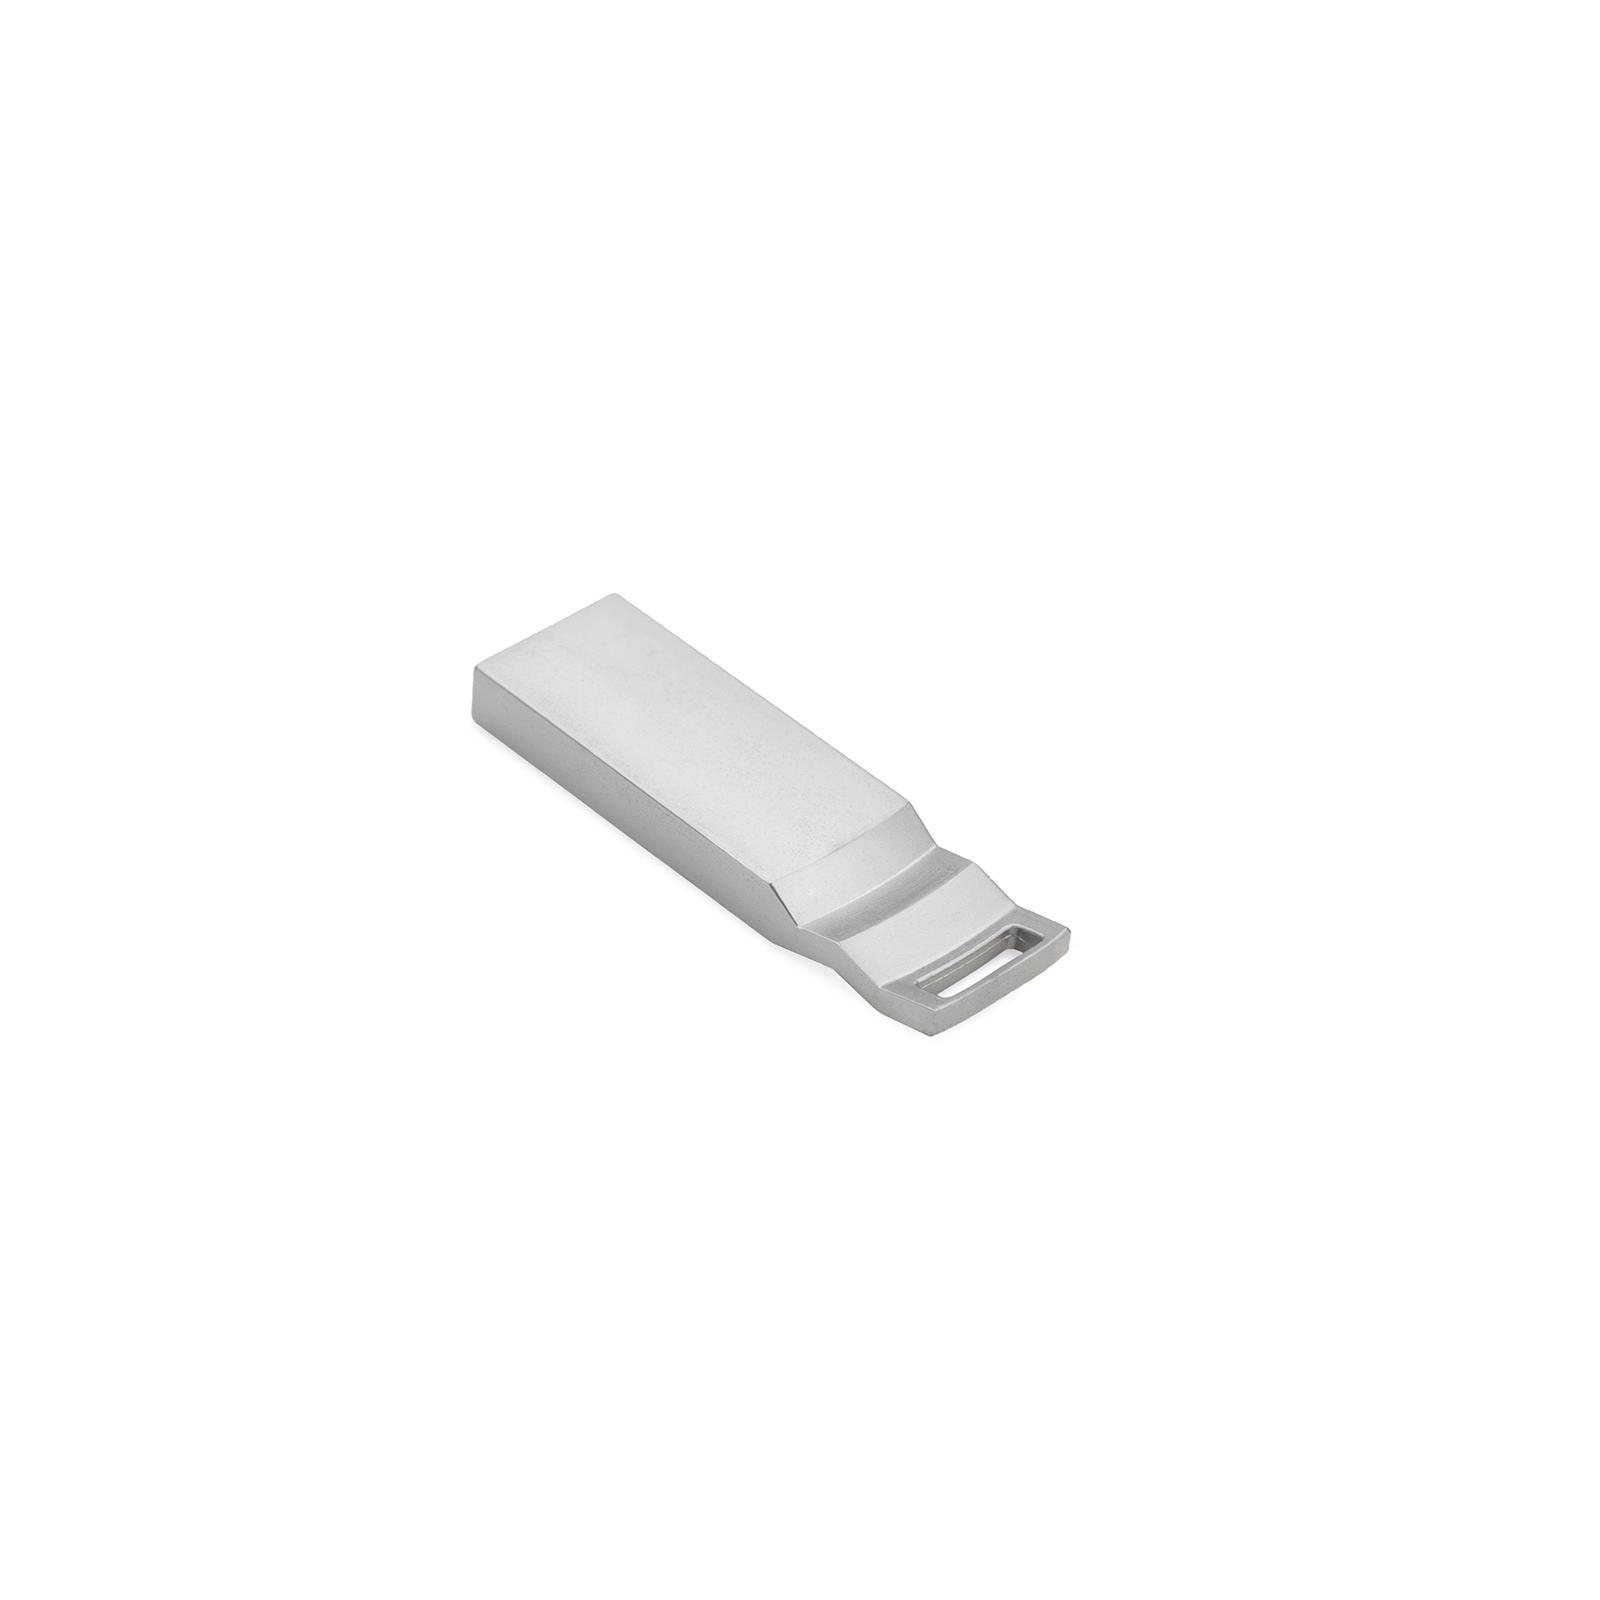 USB флеш накопитель eXceleram 32GB U2 Series Silver USB 3.1 Gen 1 (EXP2U3U2S32) изображение 3